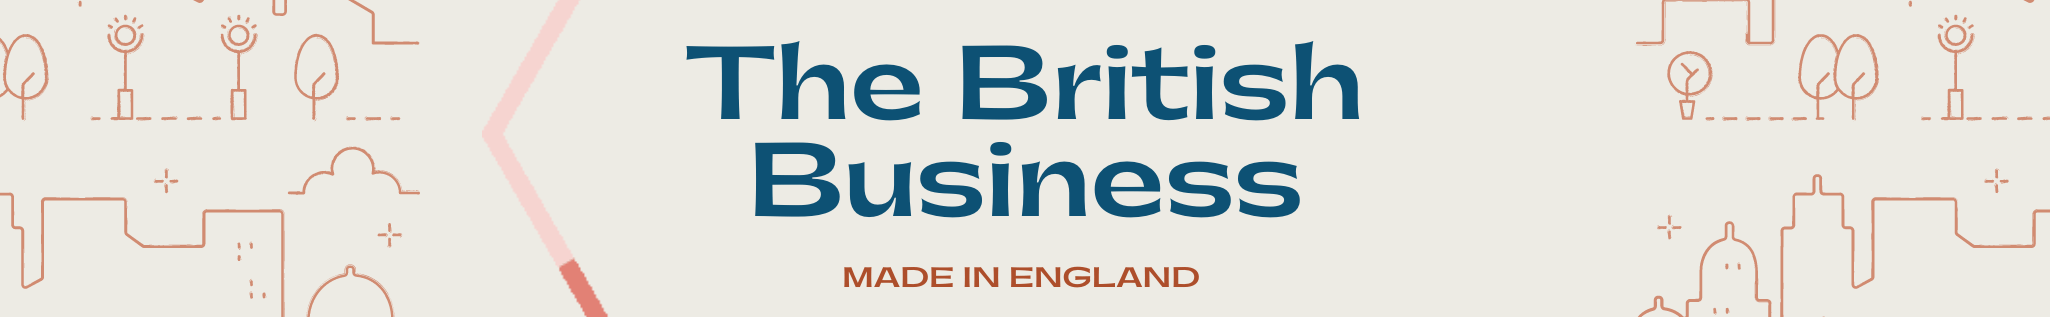 The British Business